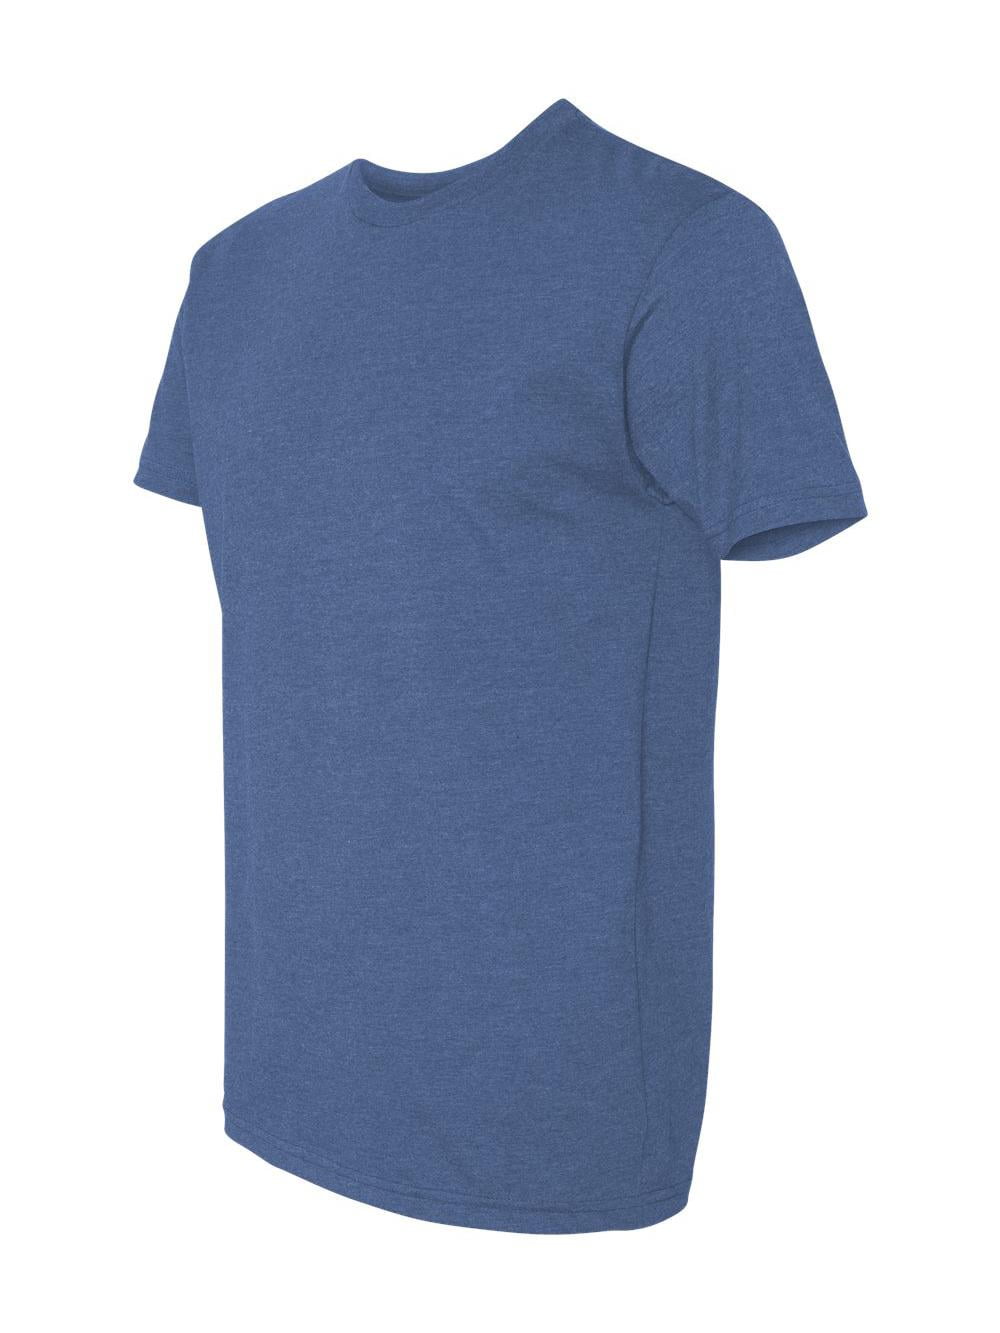 Next Level 6210 Unisex CVC T-Shirt - Heather Cool Blue - Xs